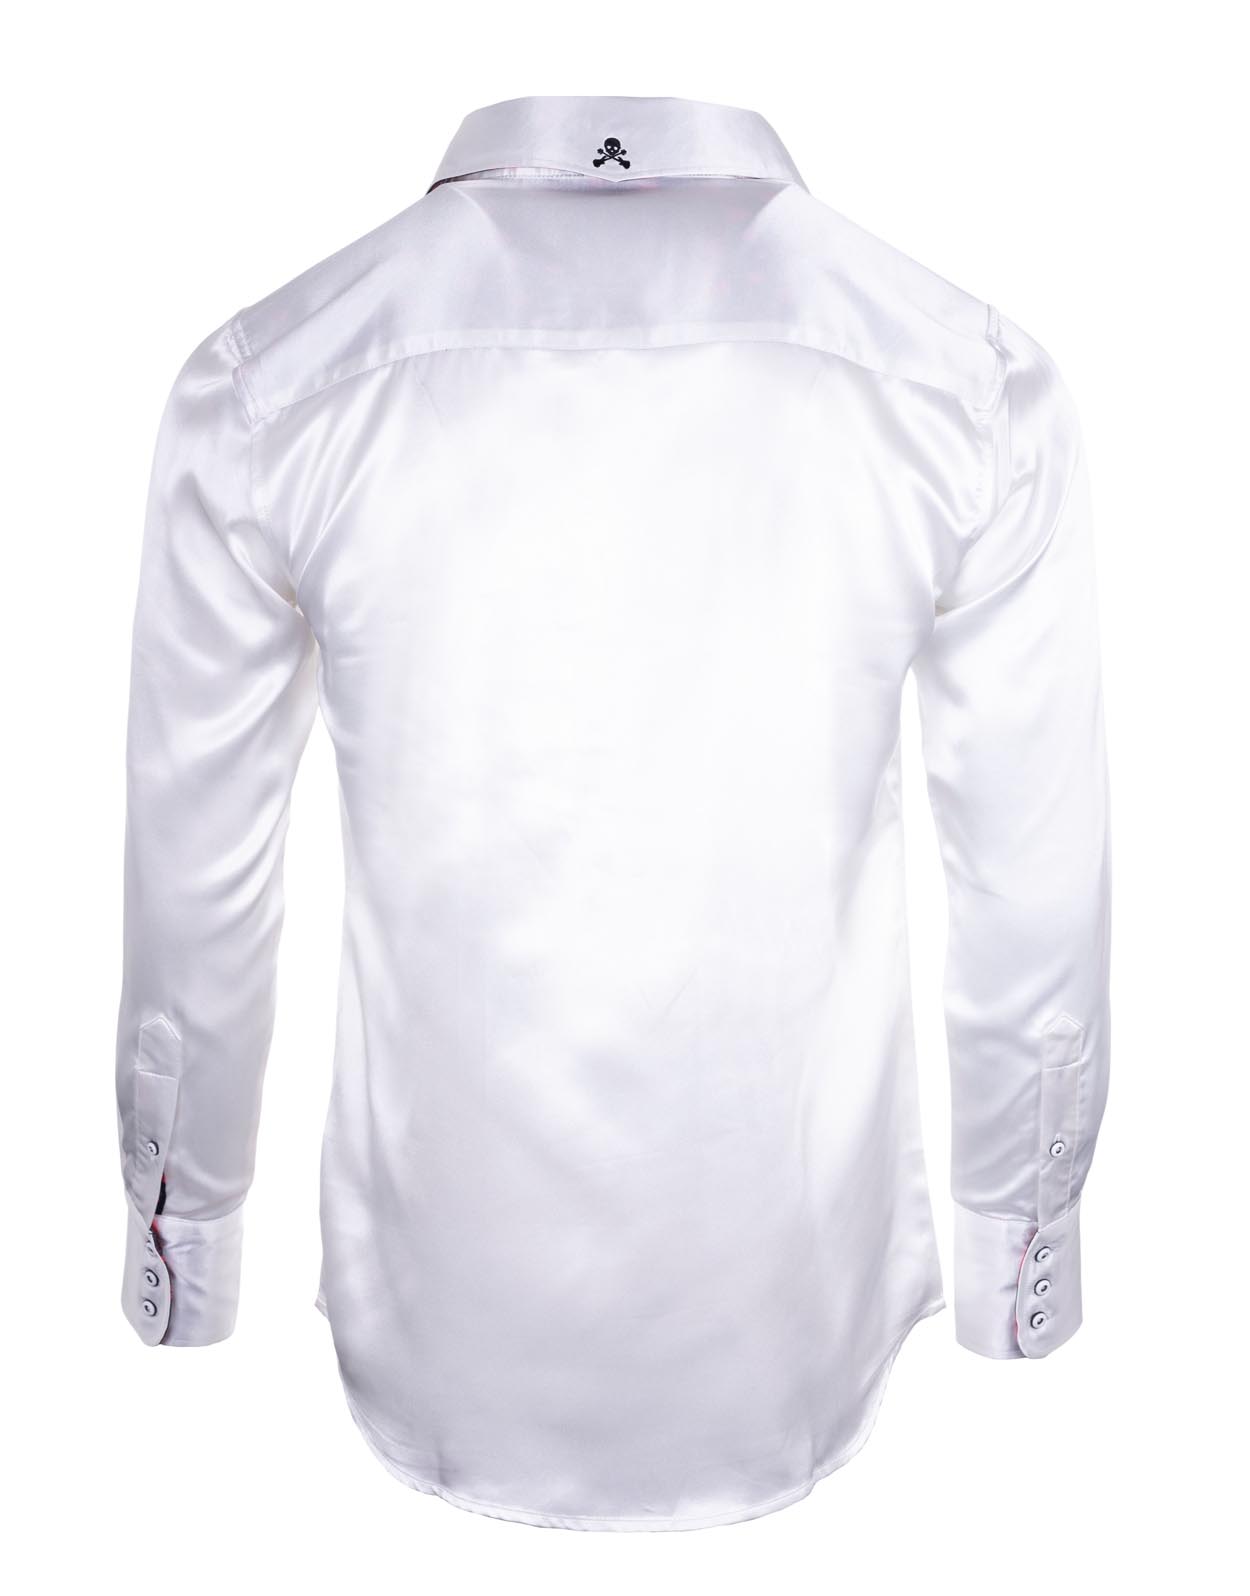 Rawlings Men's Shirt - White - M